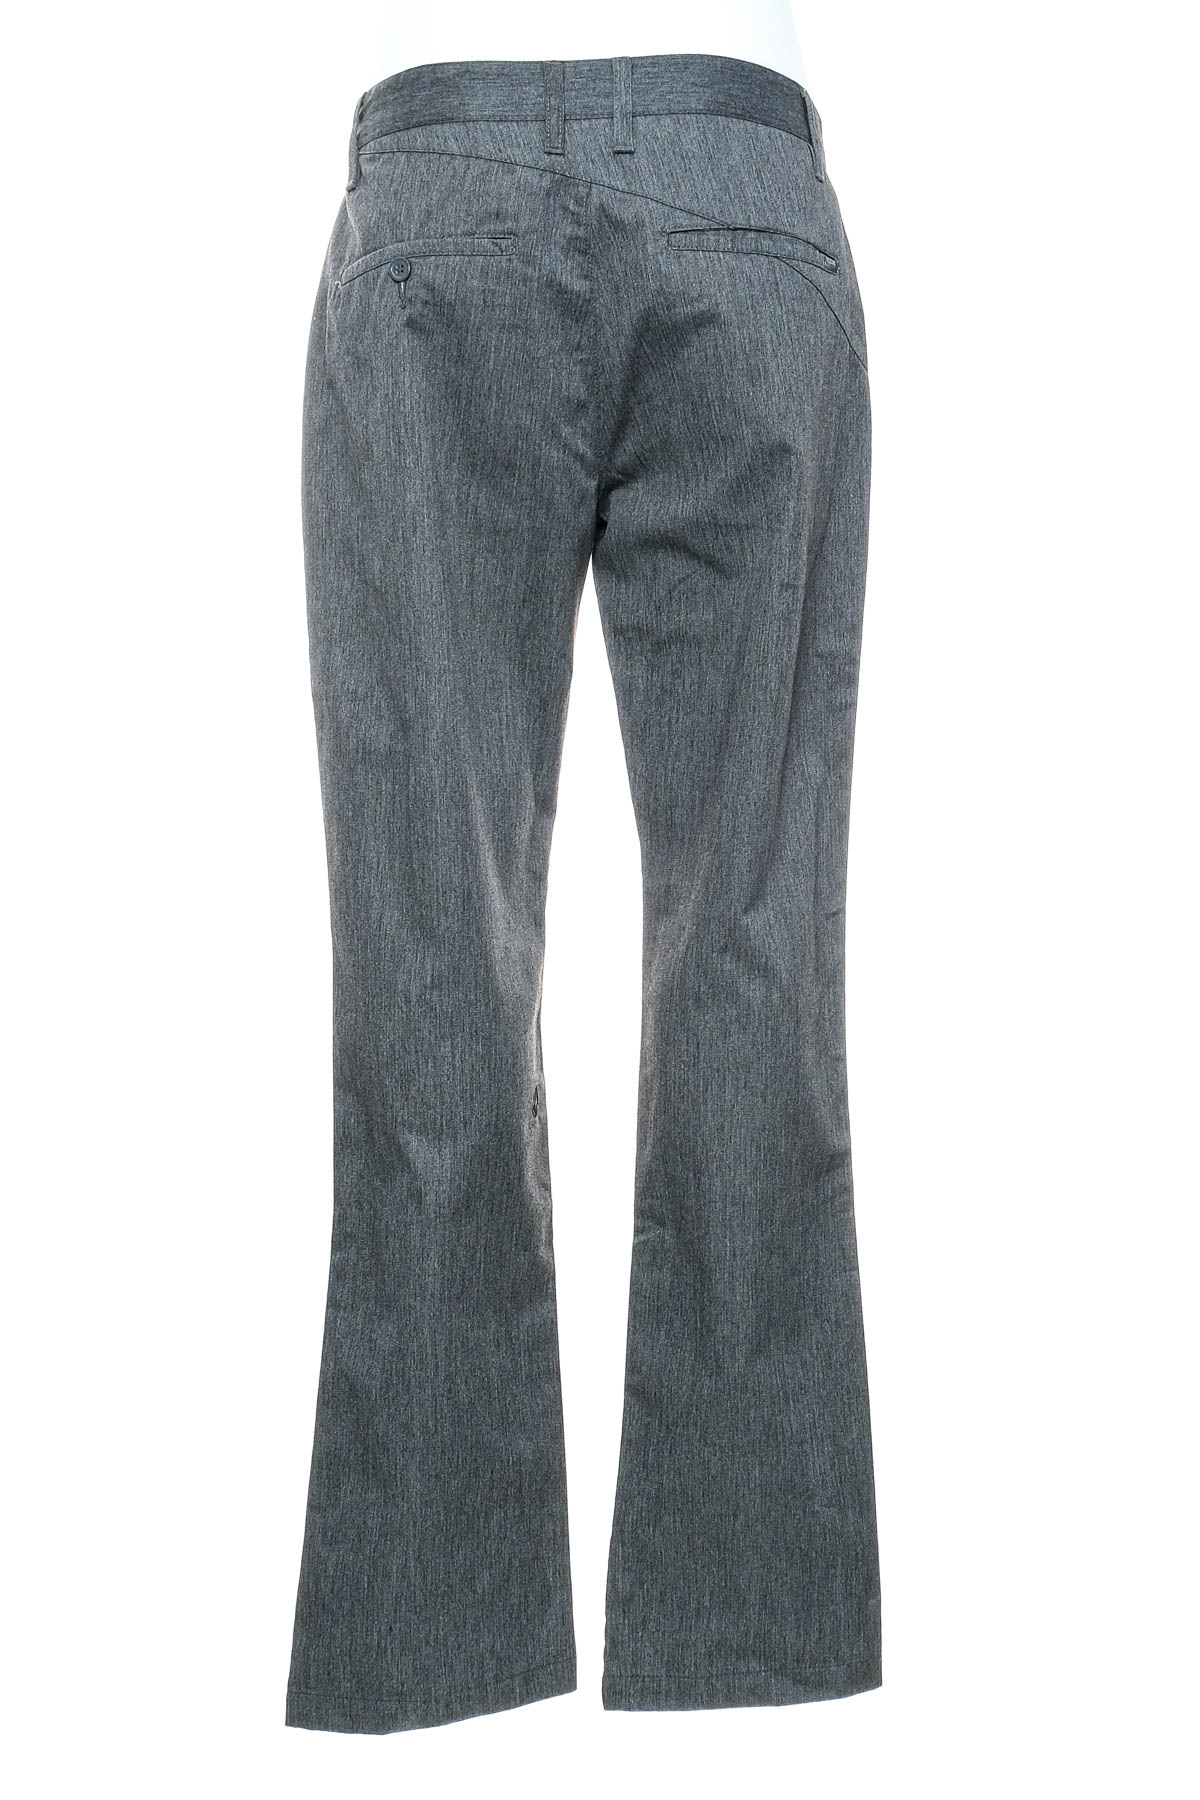 Men's trousers - Volcom - 1